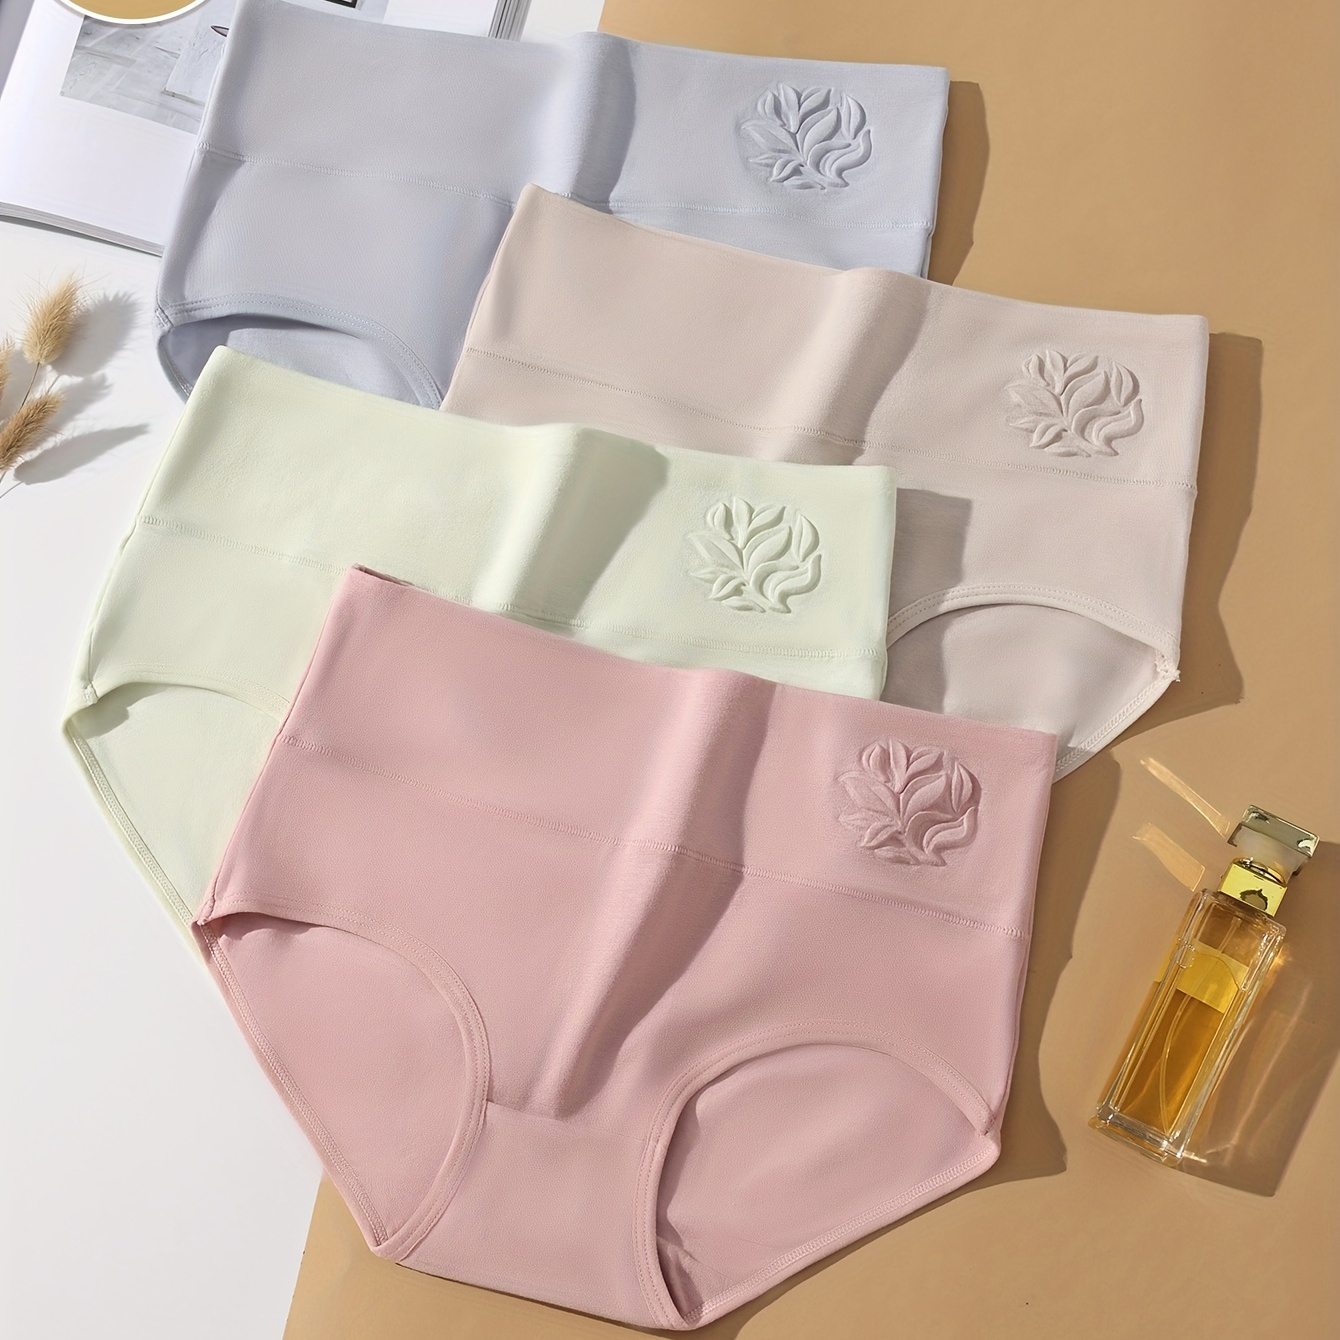 

4pcs Solid Cotton Briefs, Simple & Comfy Breathable Stretchy Intimates Panties, Women's Lingerie & Underwear